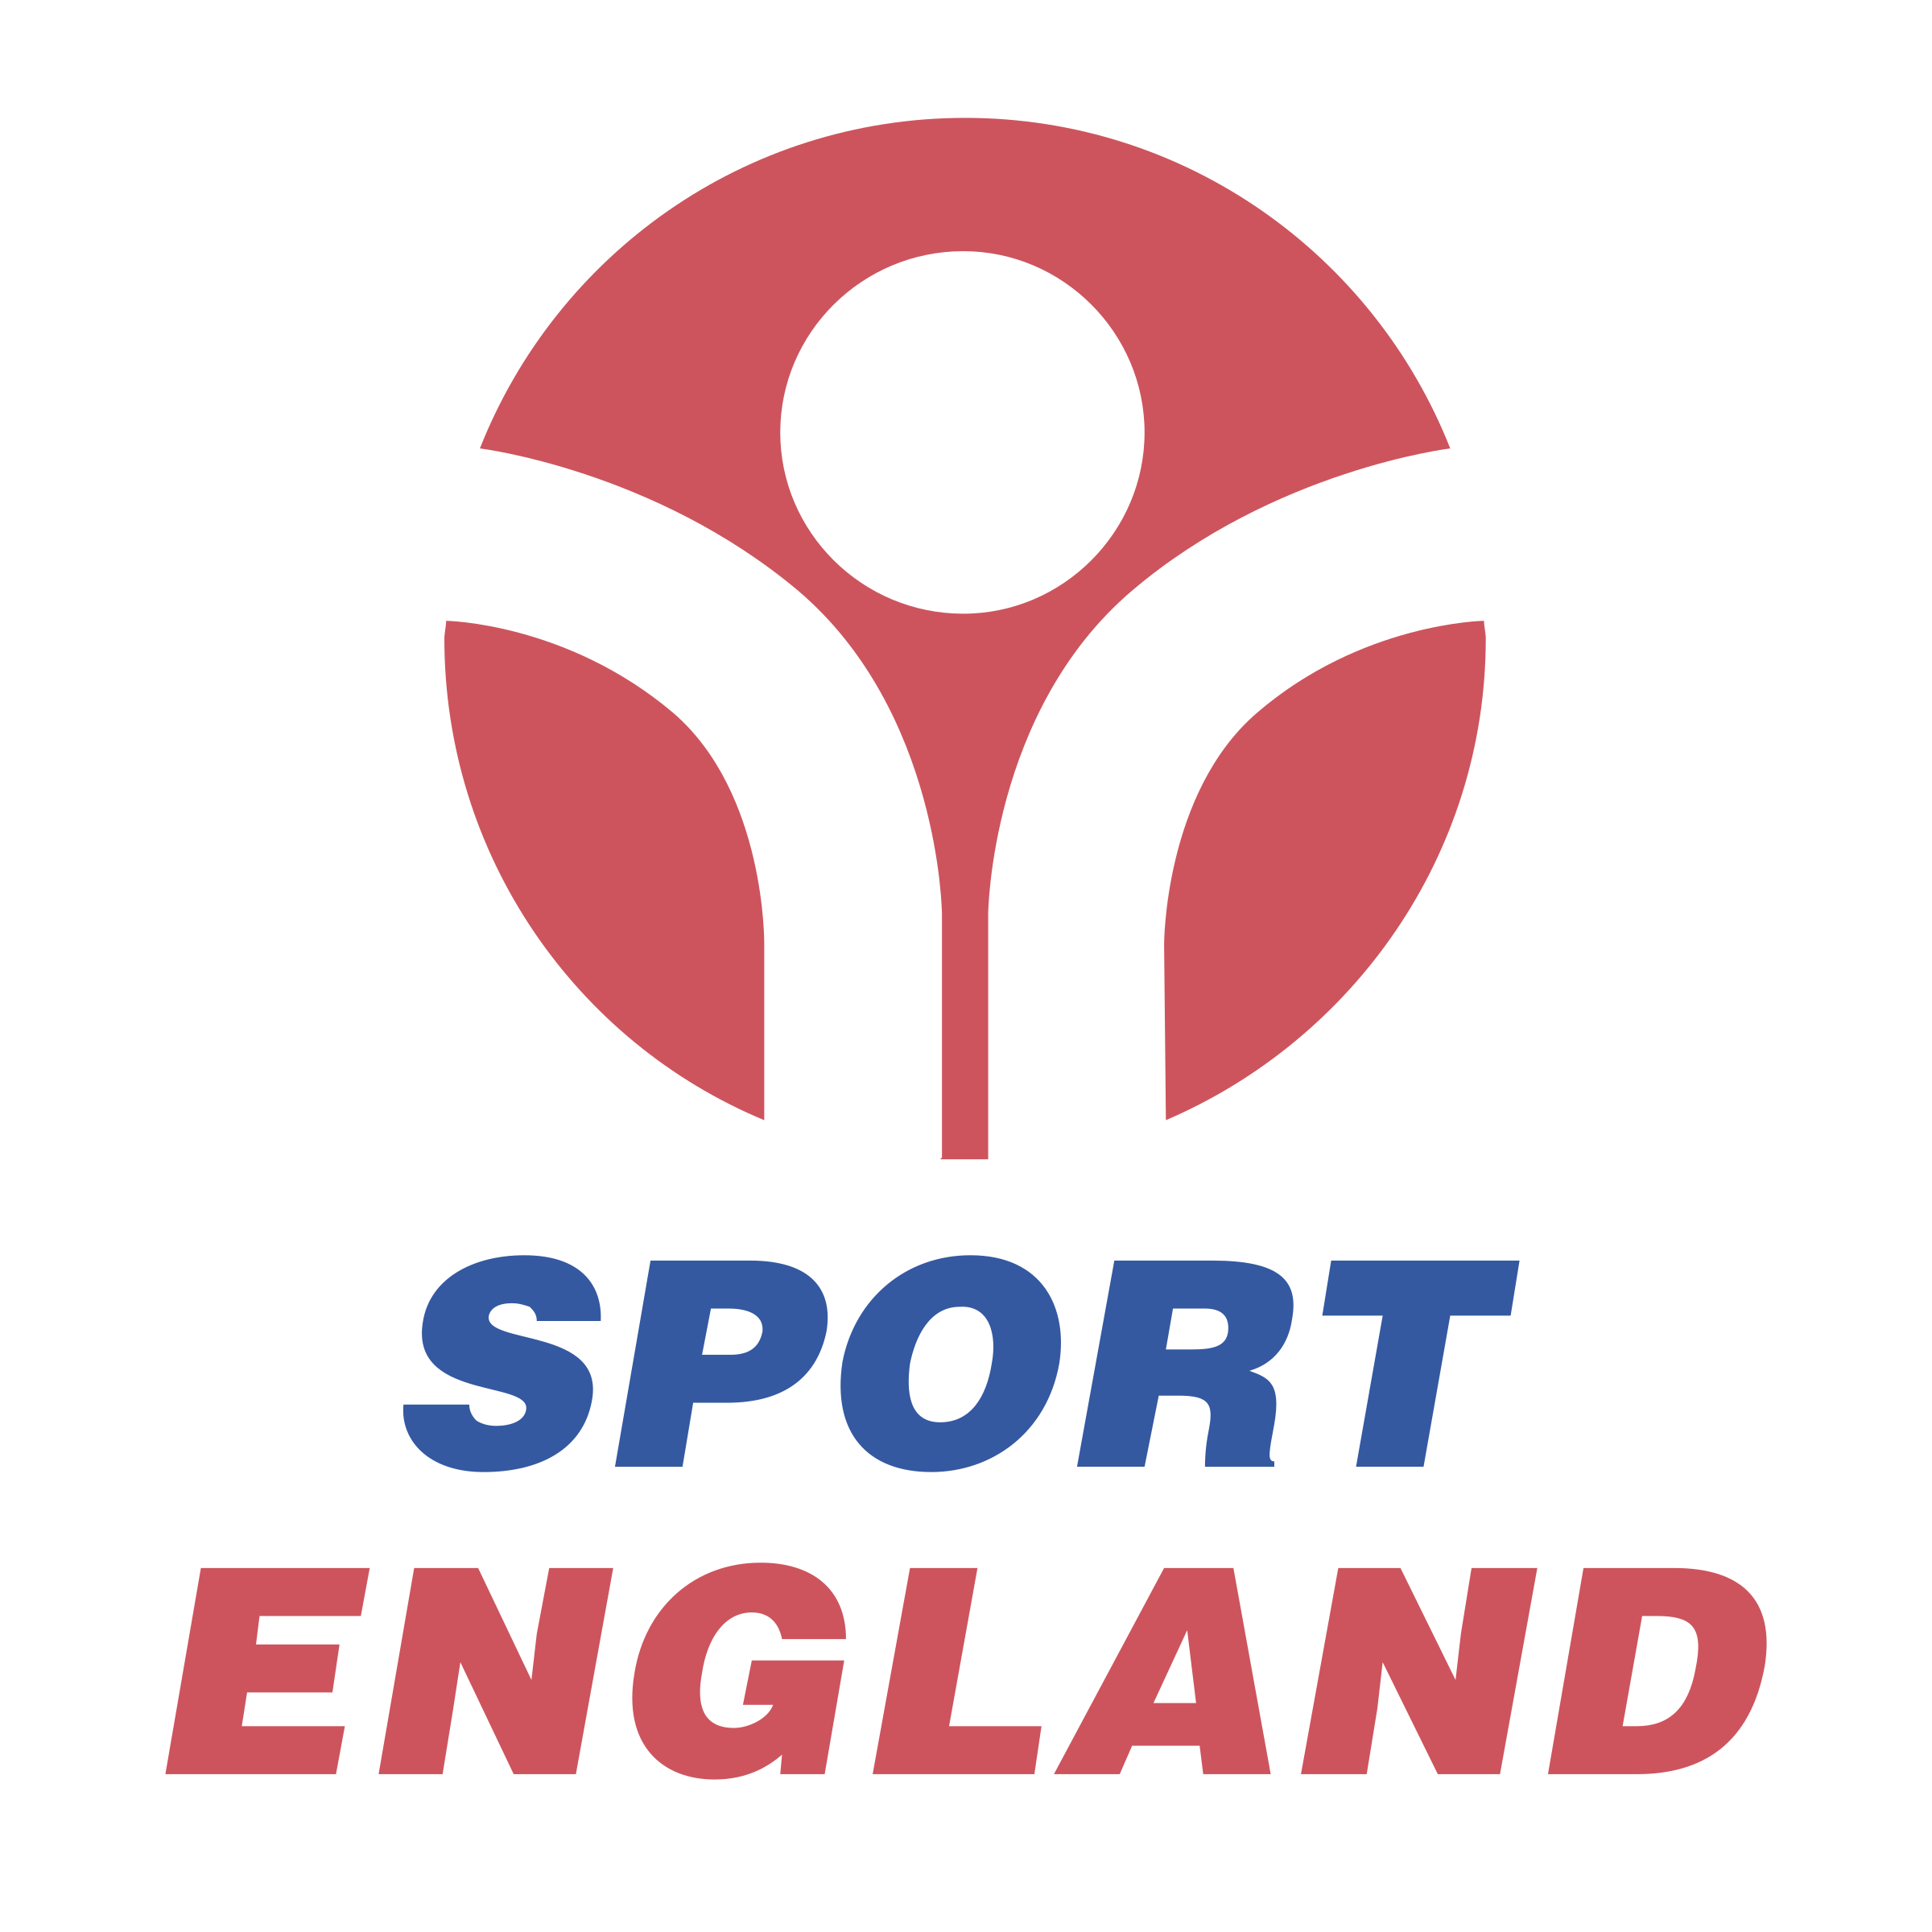 sport england clubmark logo